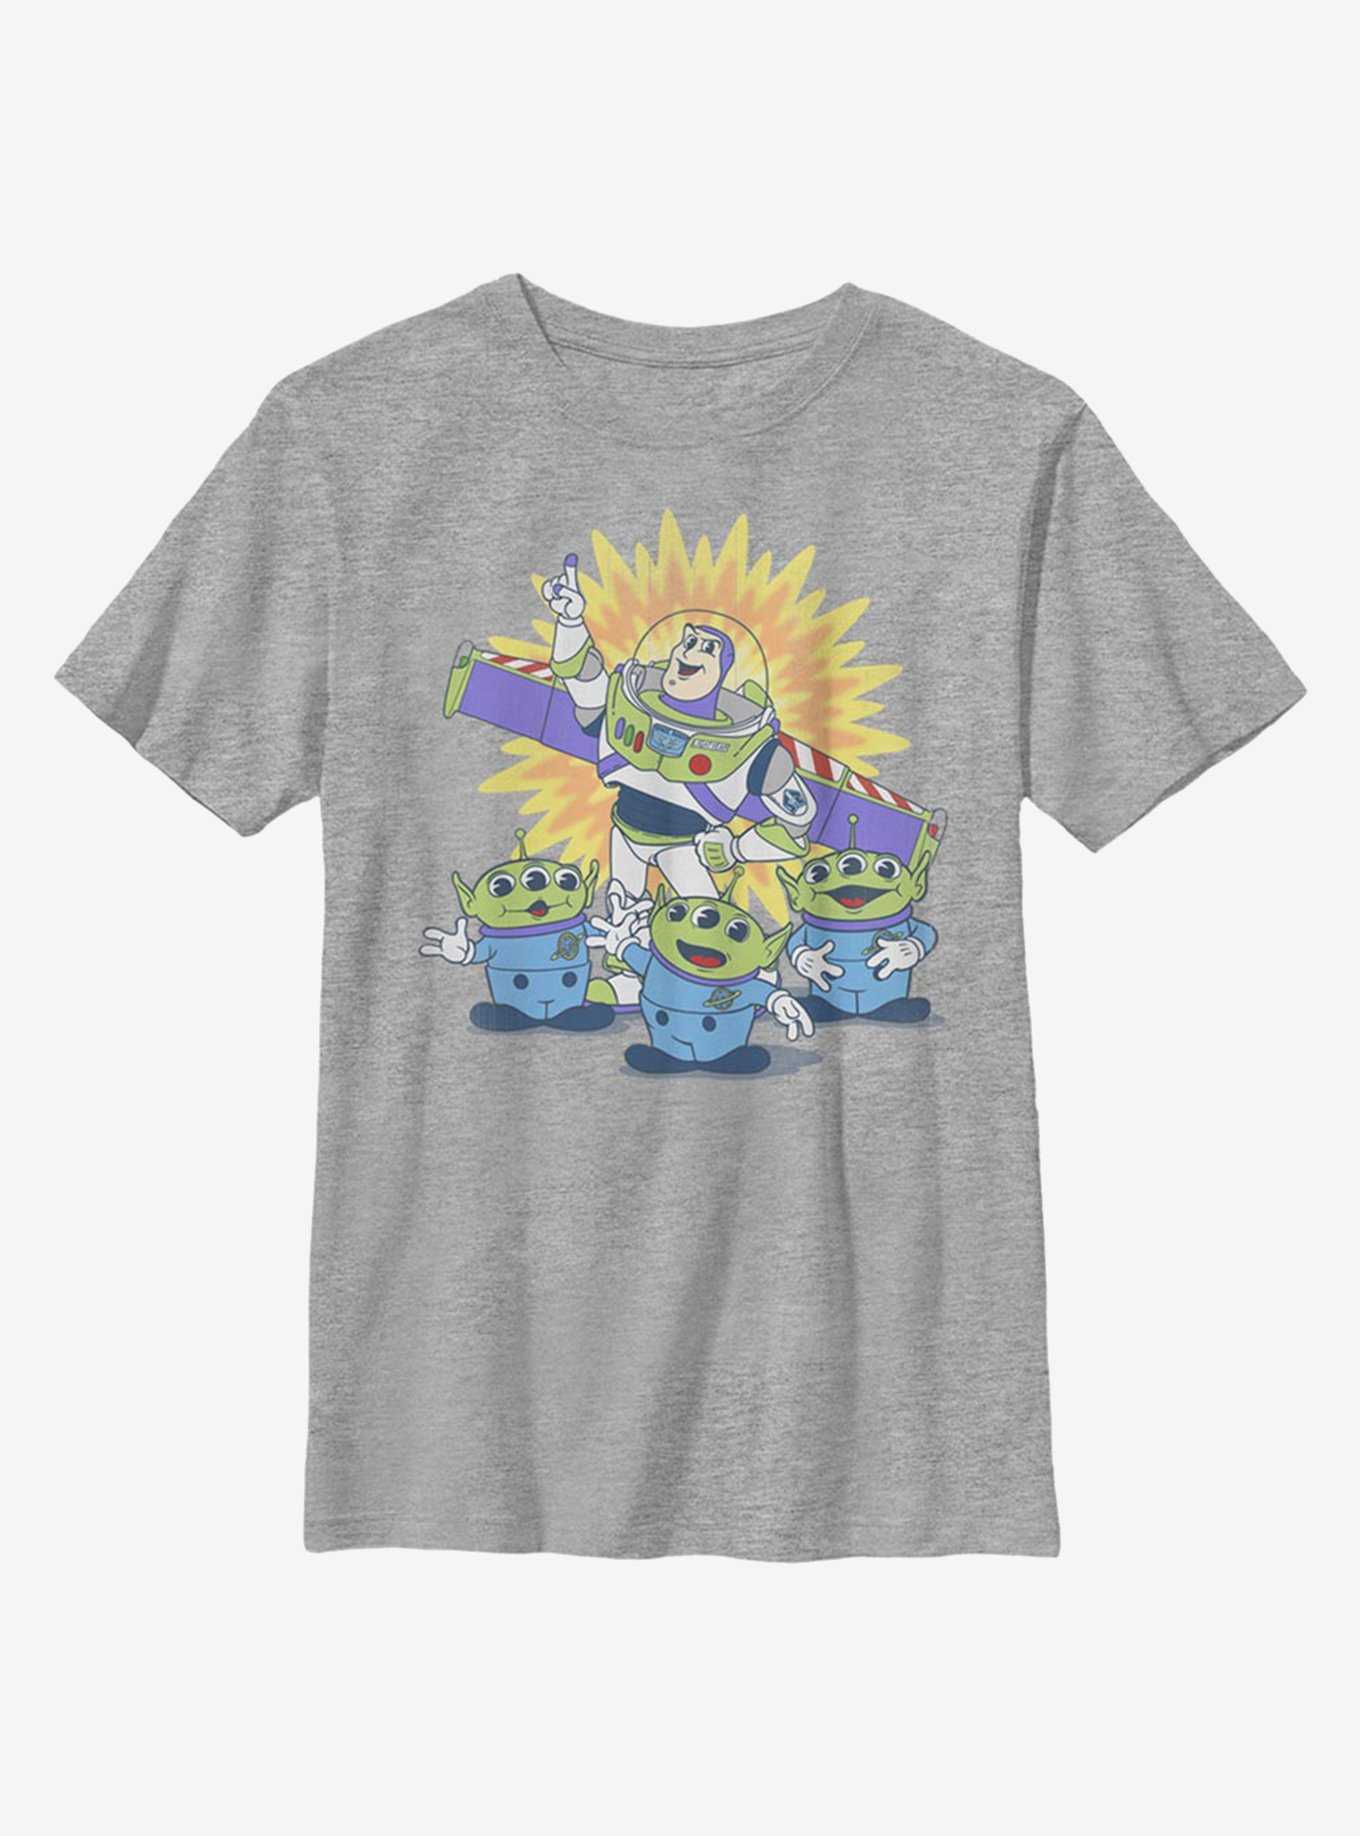 Disney Pixar Toy Story Vintage Buzz Youth T-Shirt, , hi-res